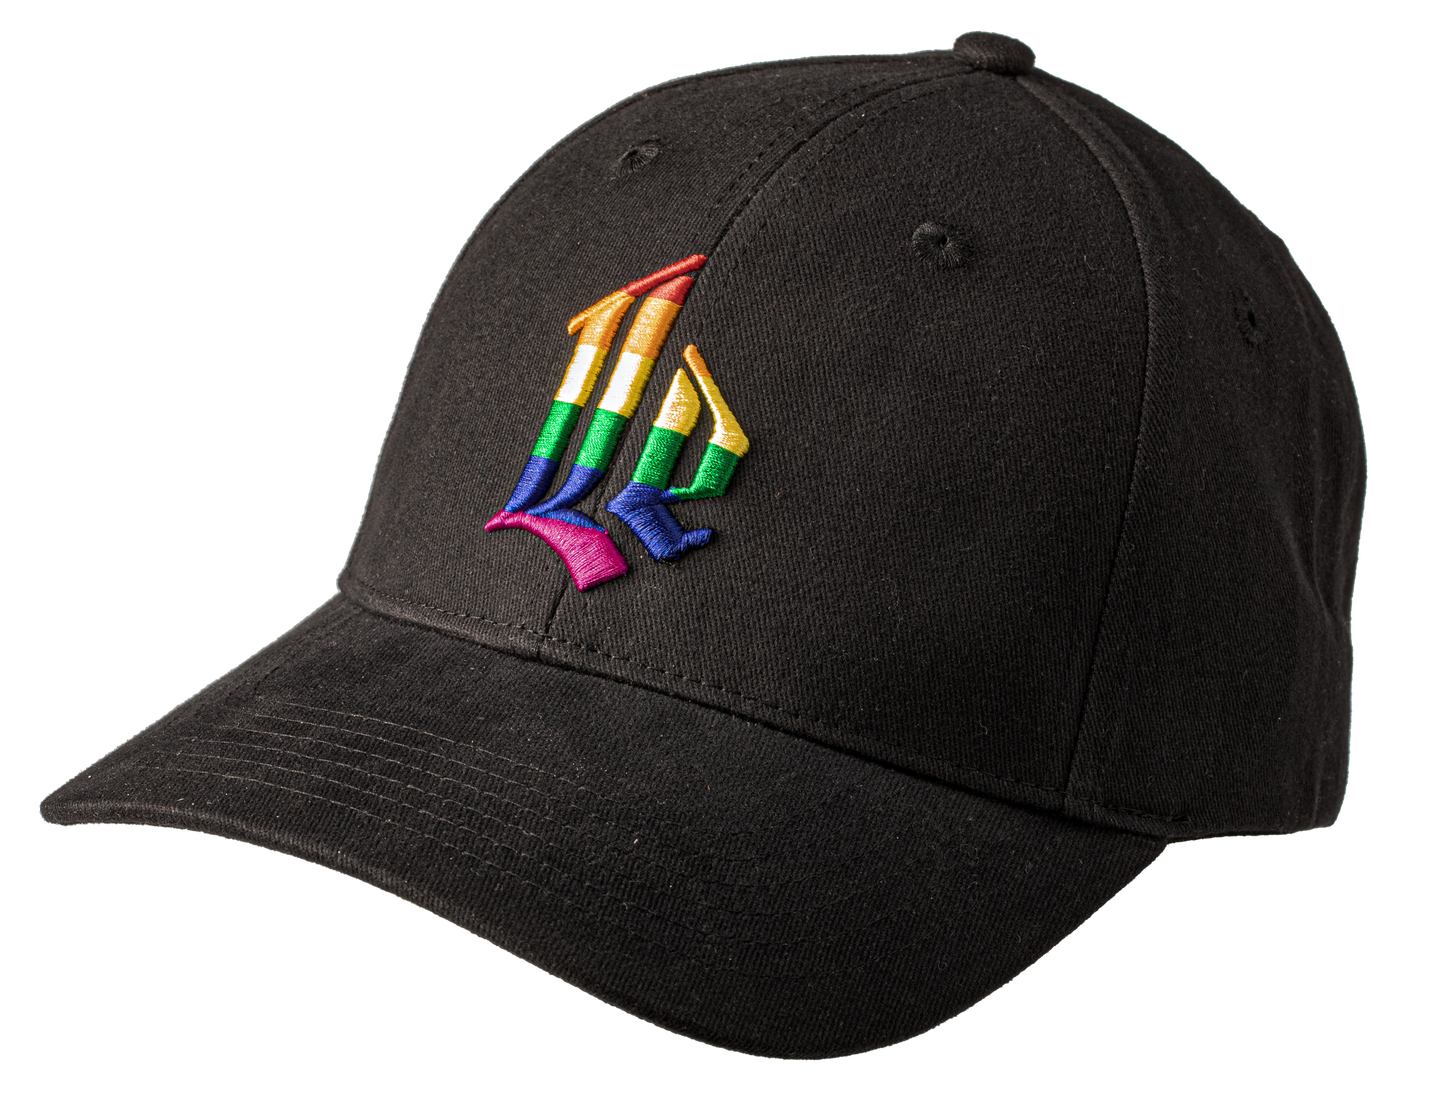 LE - Cap (schwarz/rainbow)